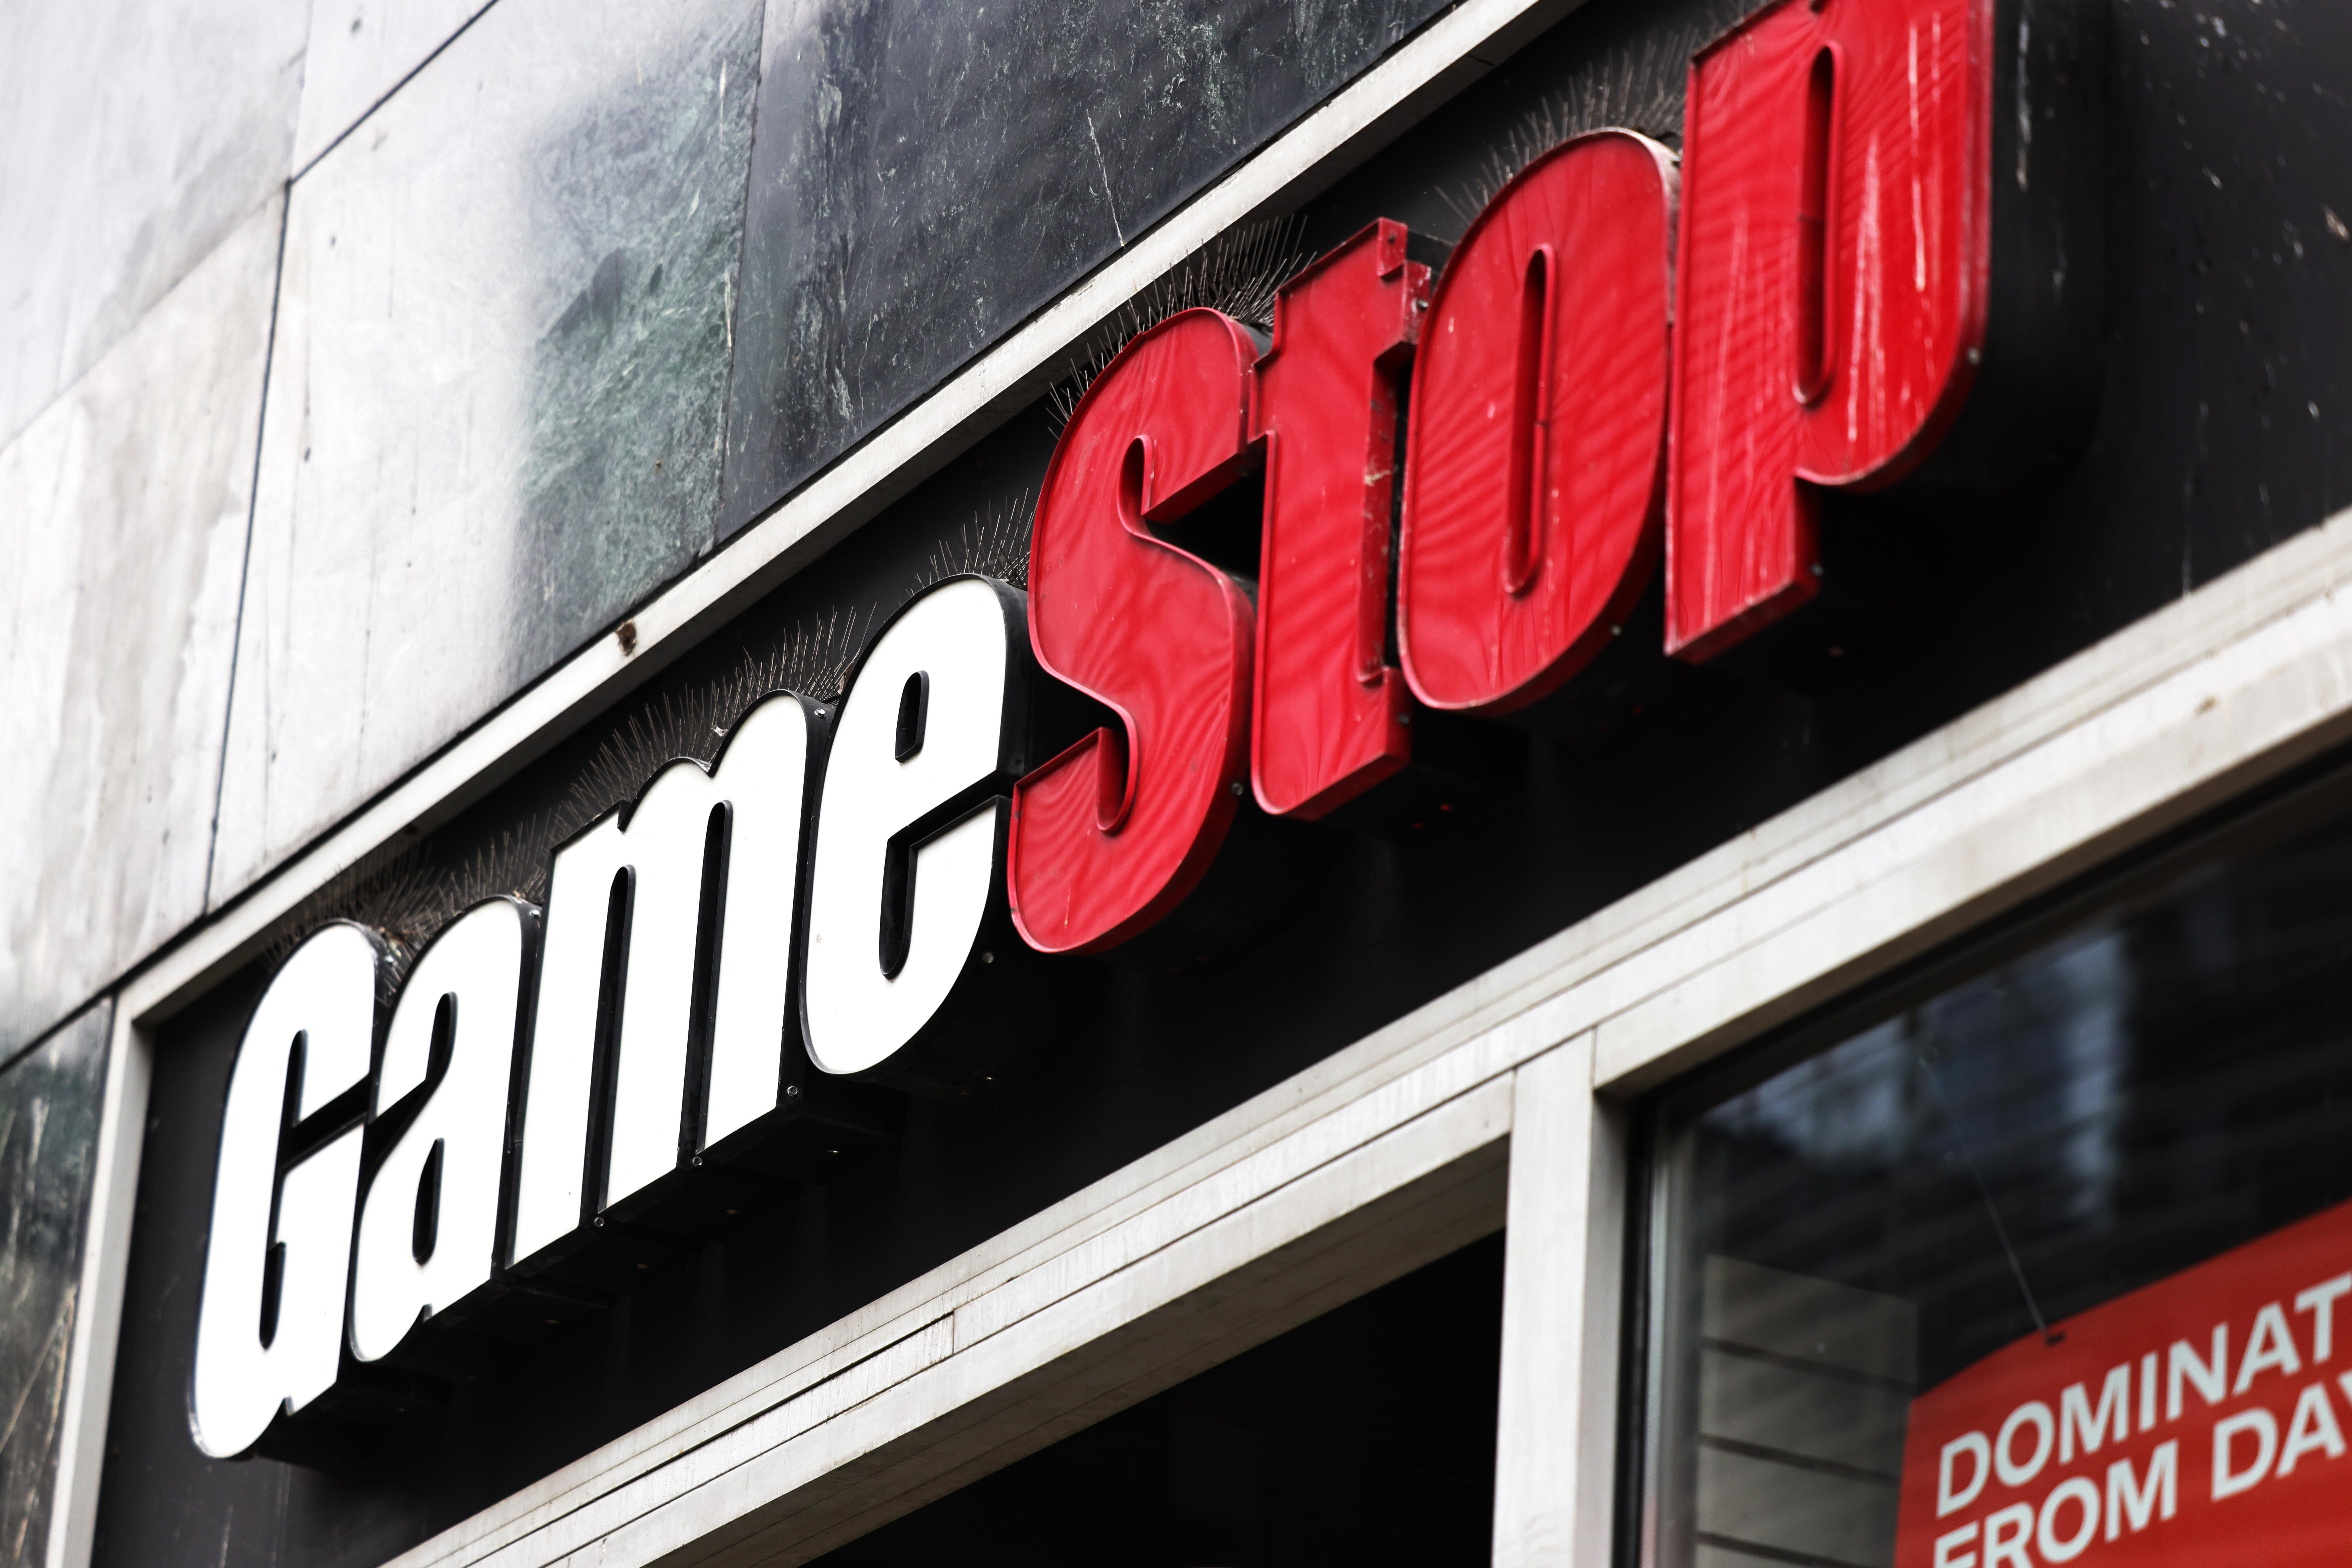 A GameStop storefront